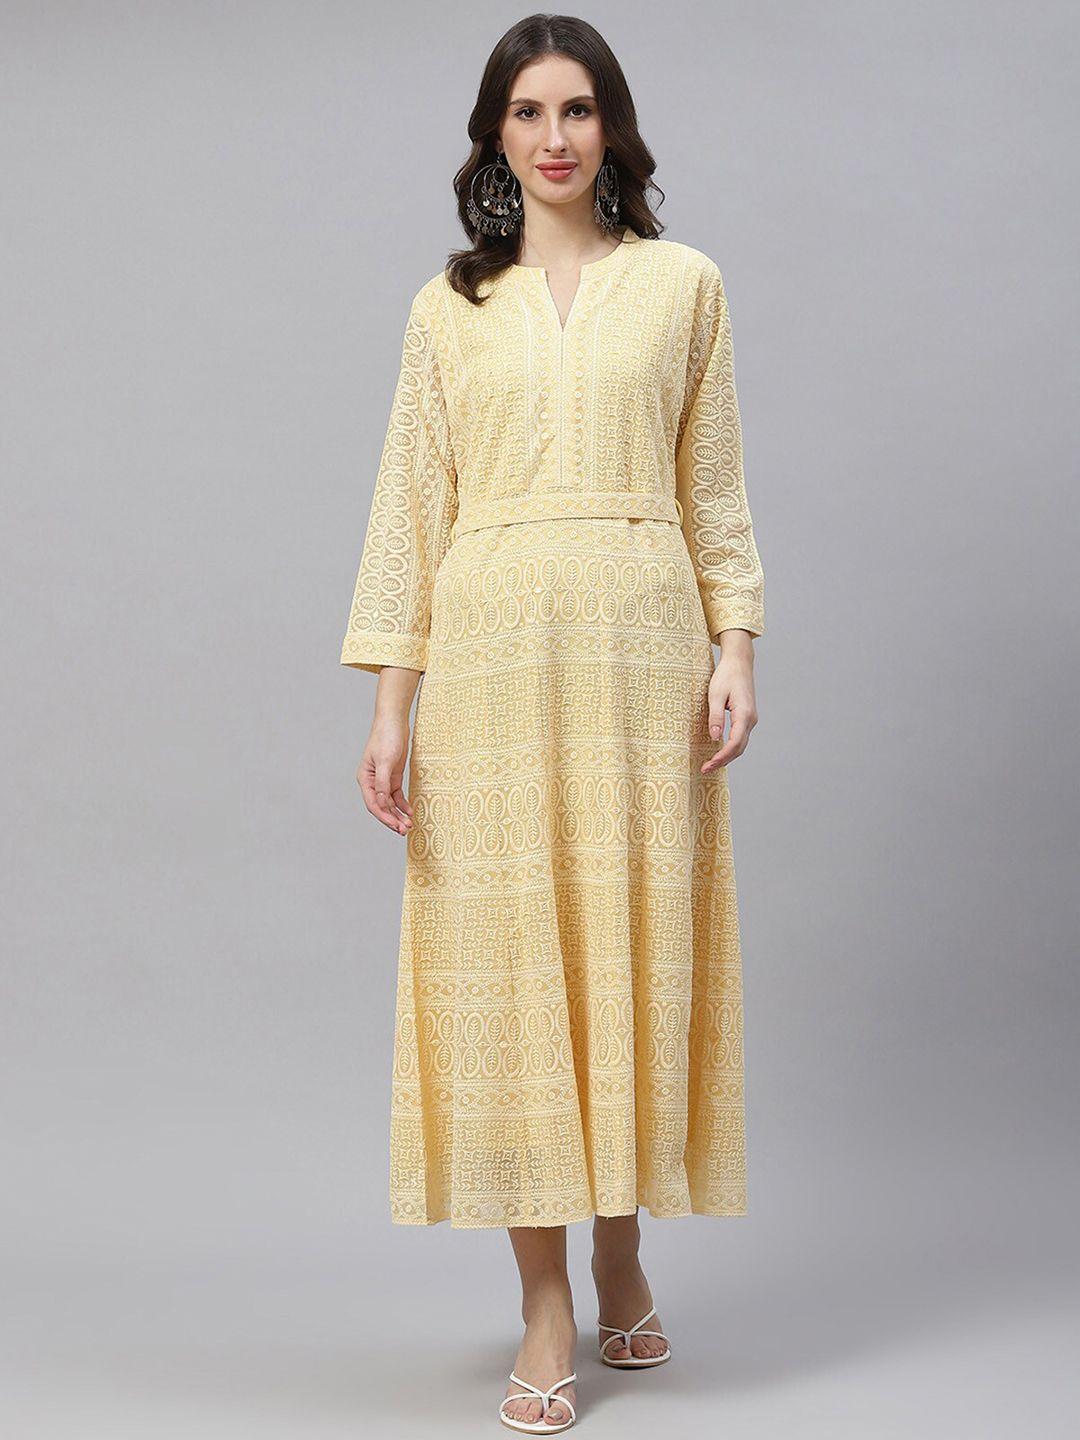 odette yellow ethnic motifs print georgette a-line midi dress